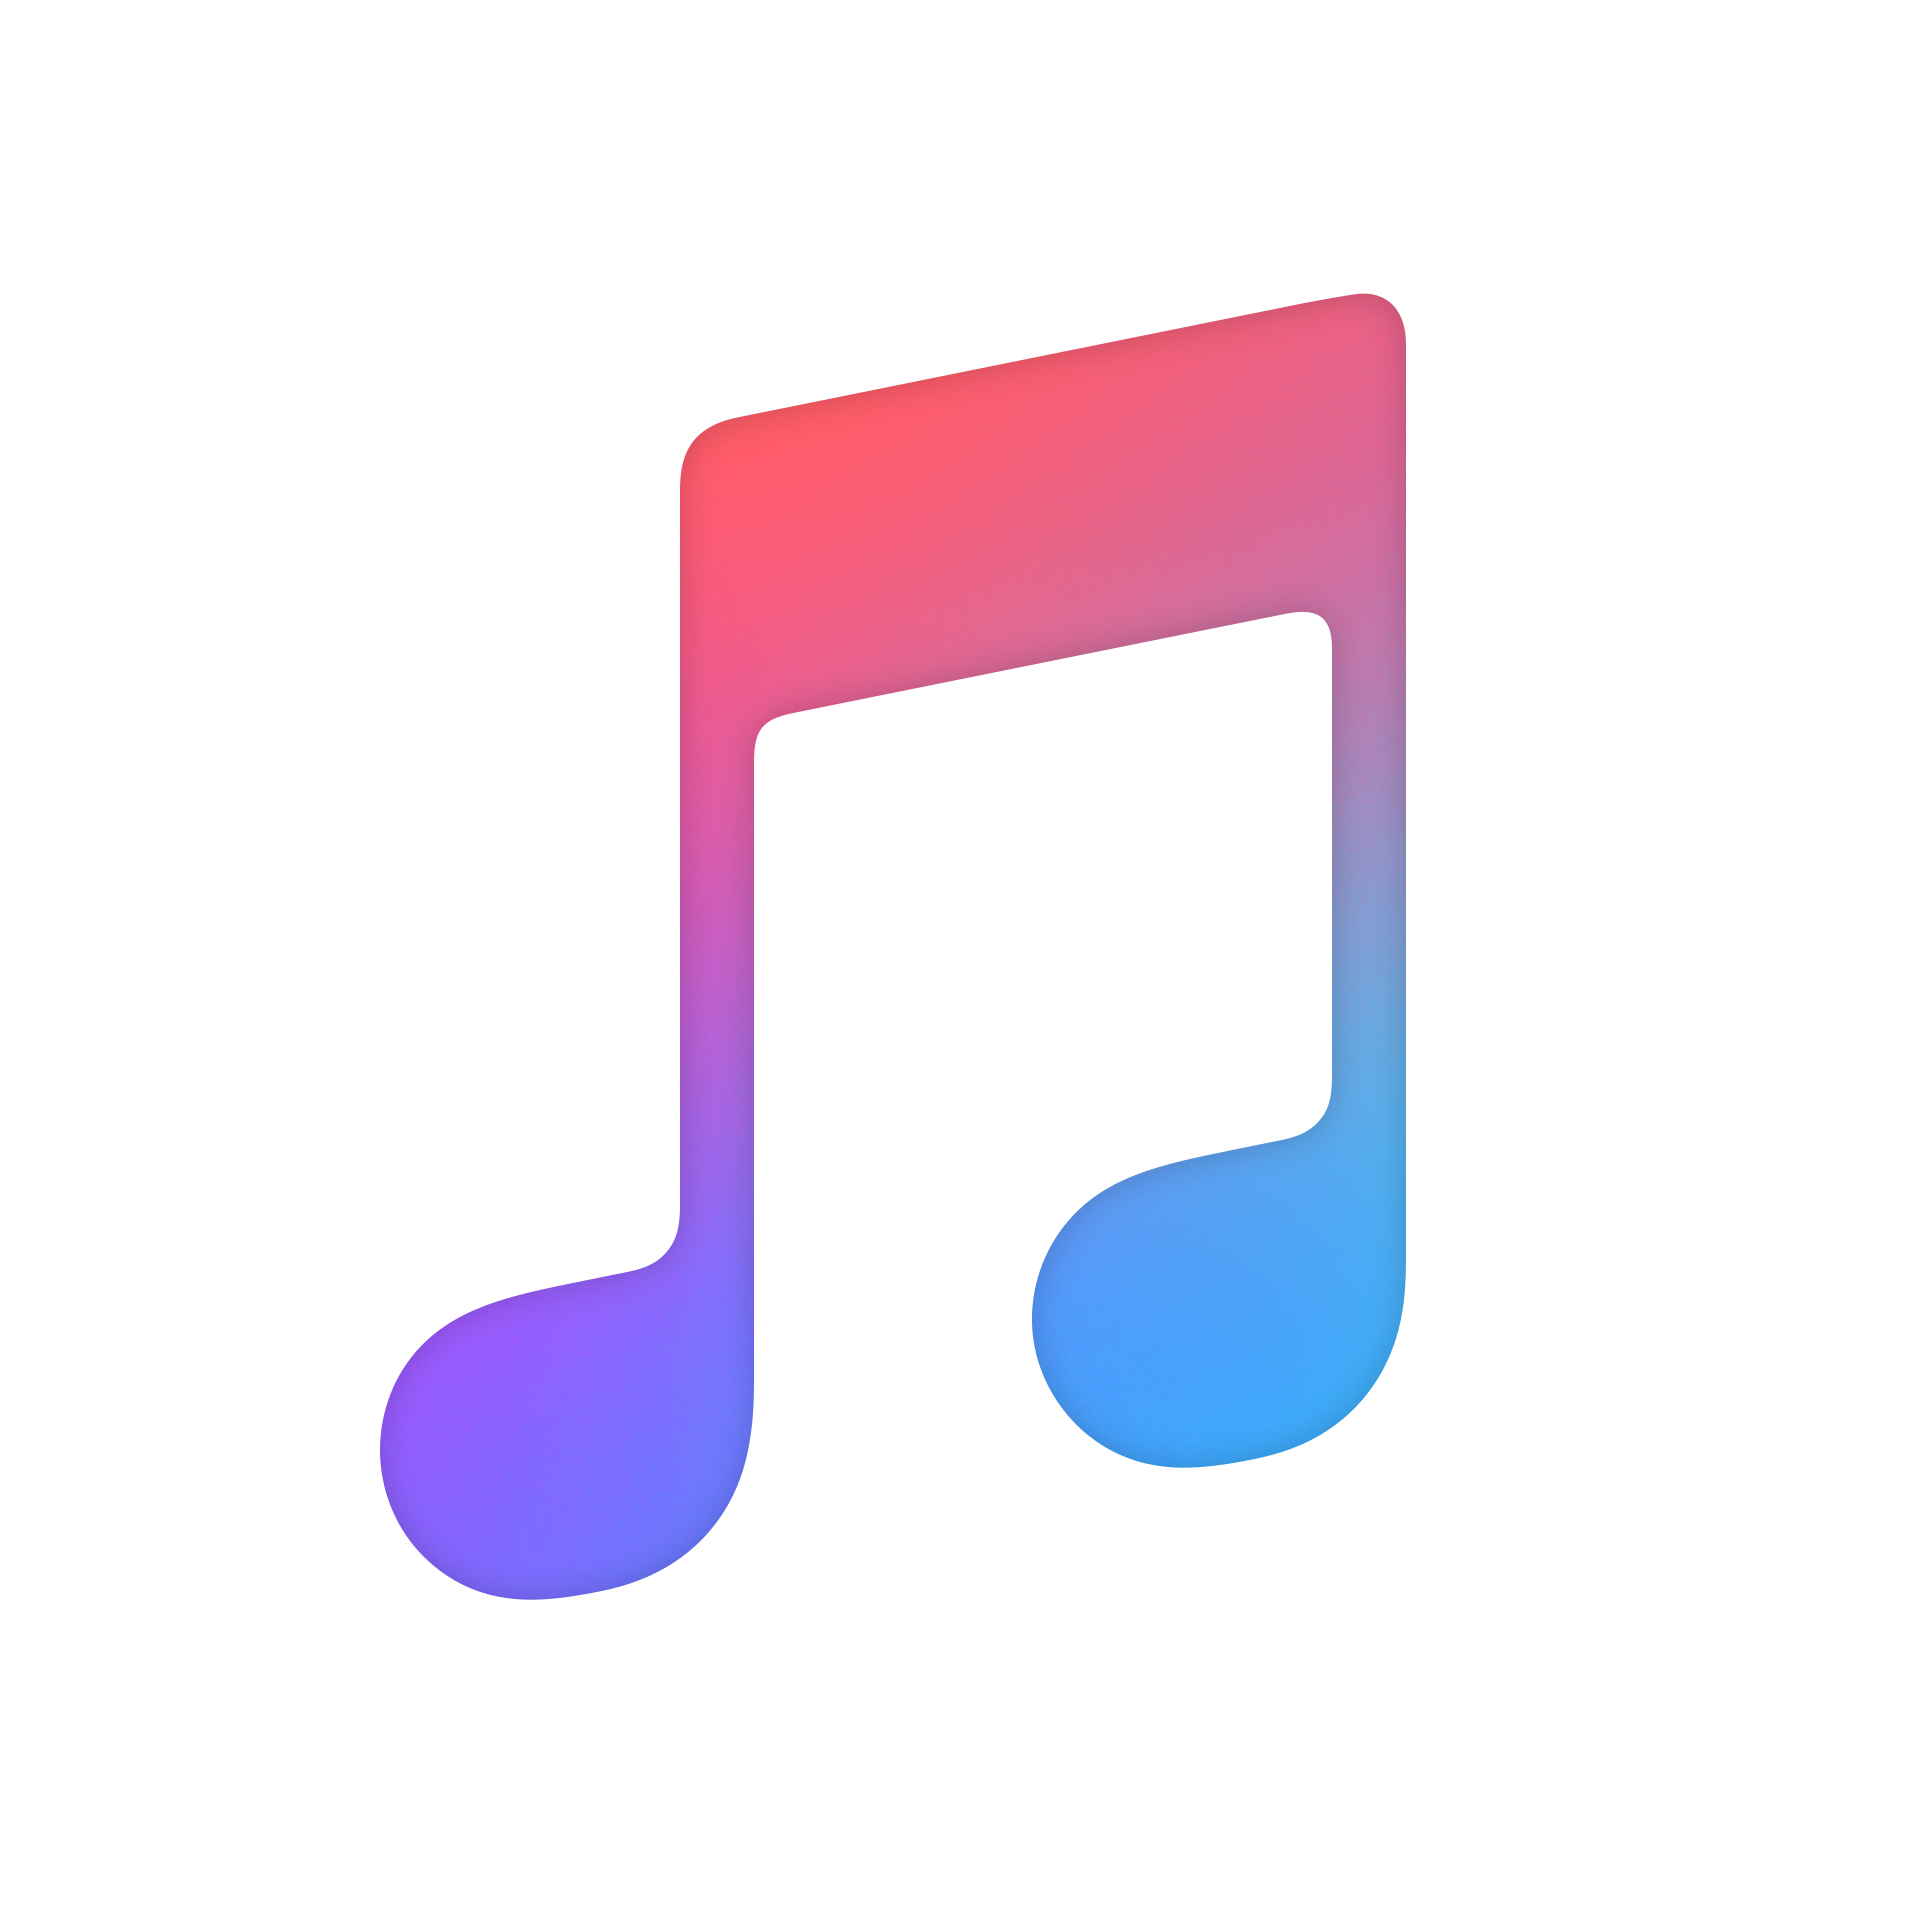 apple music download pc